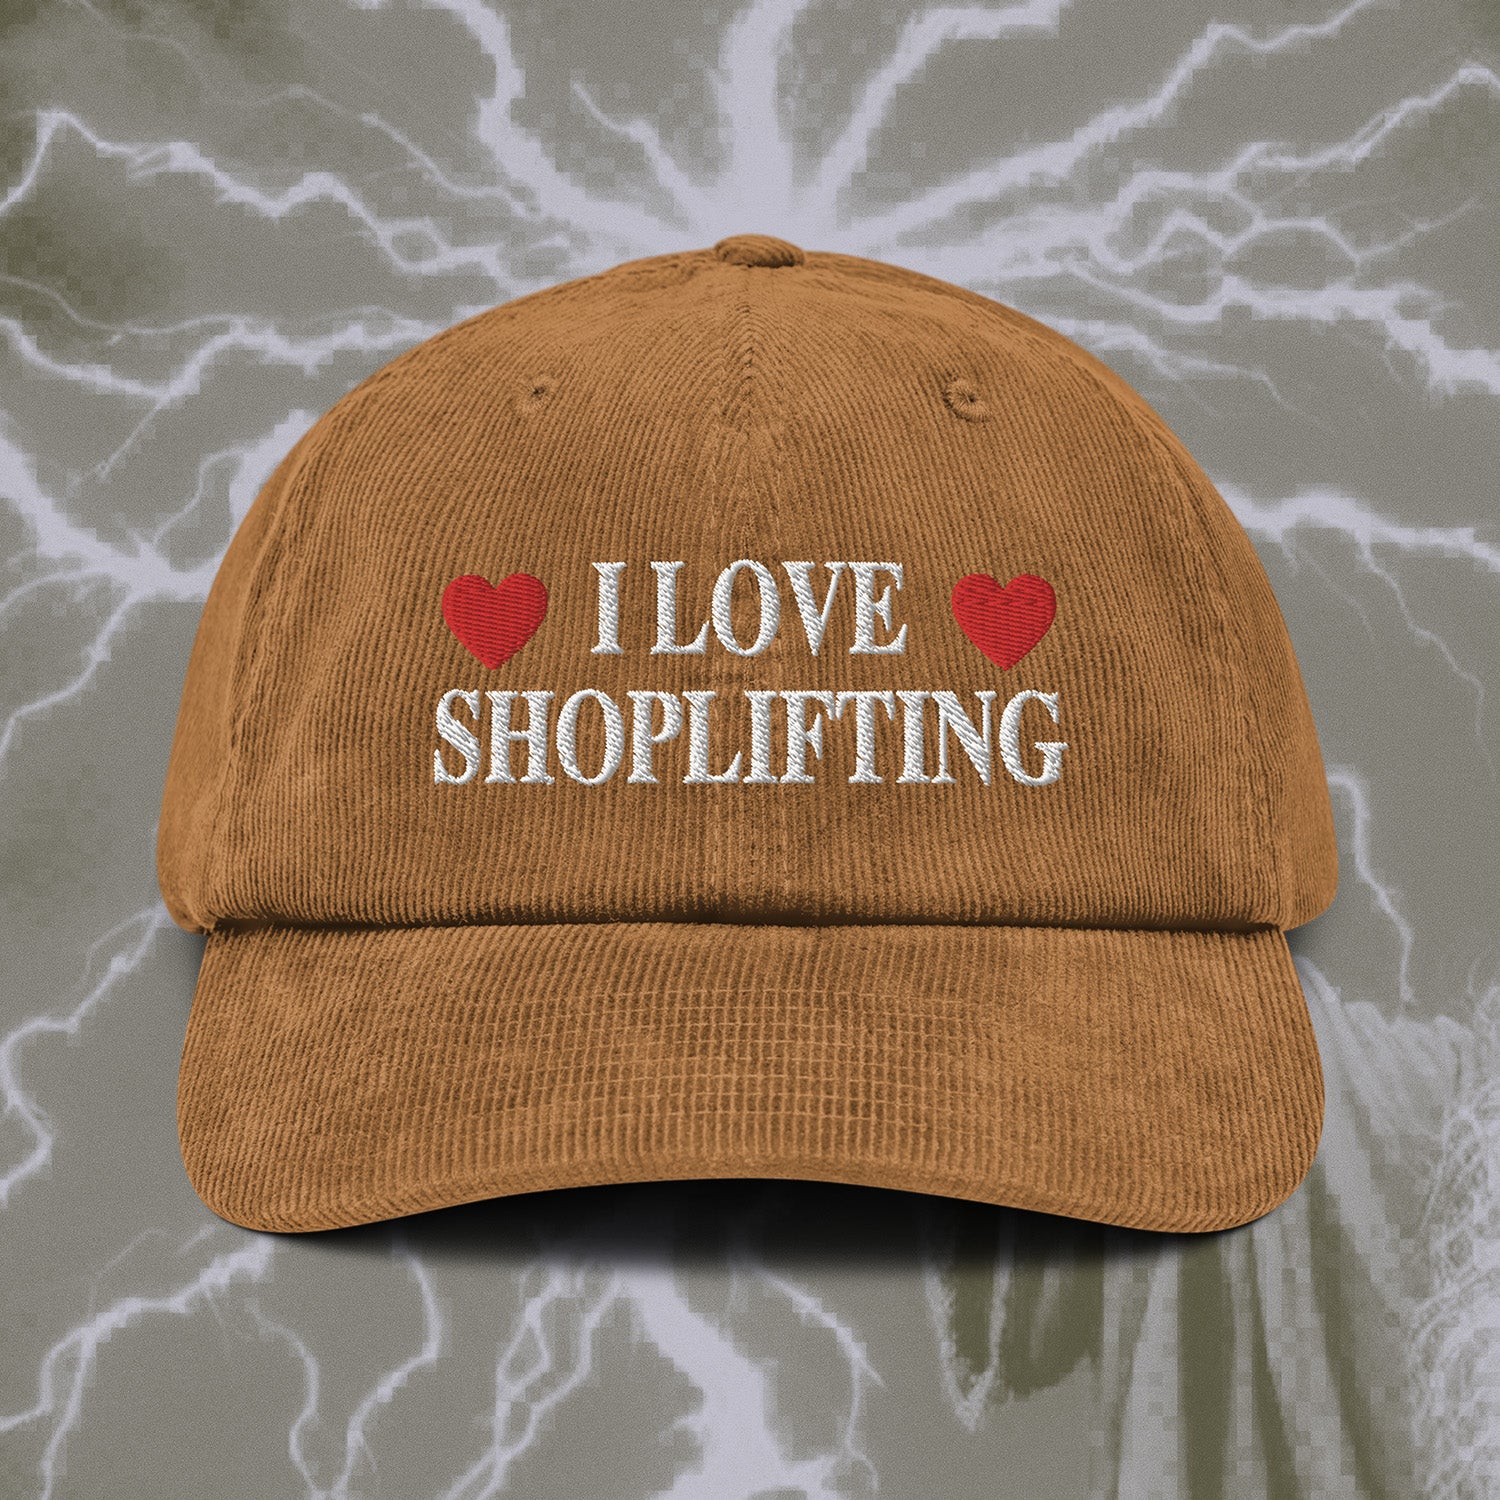 ❤️ shoplifting